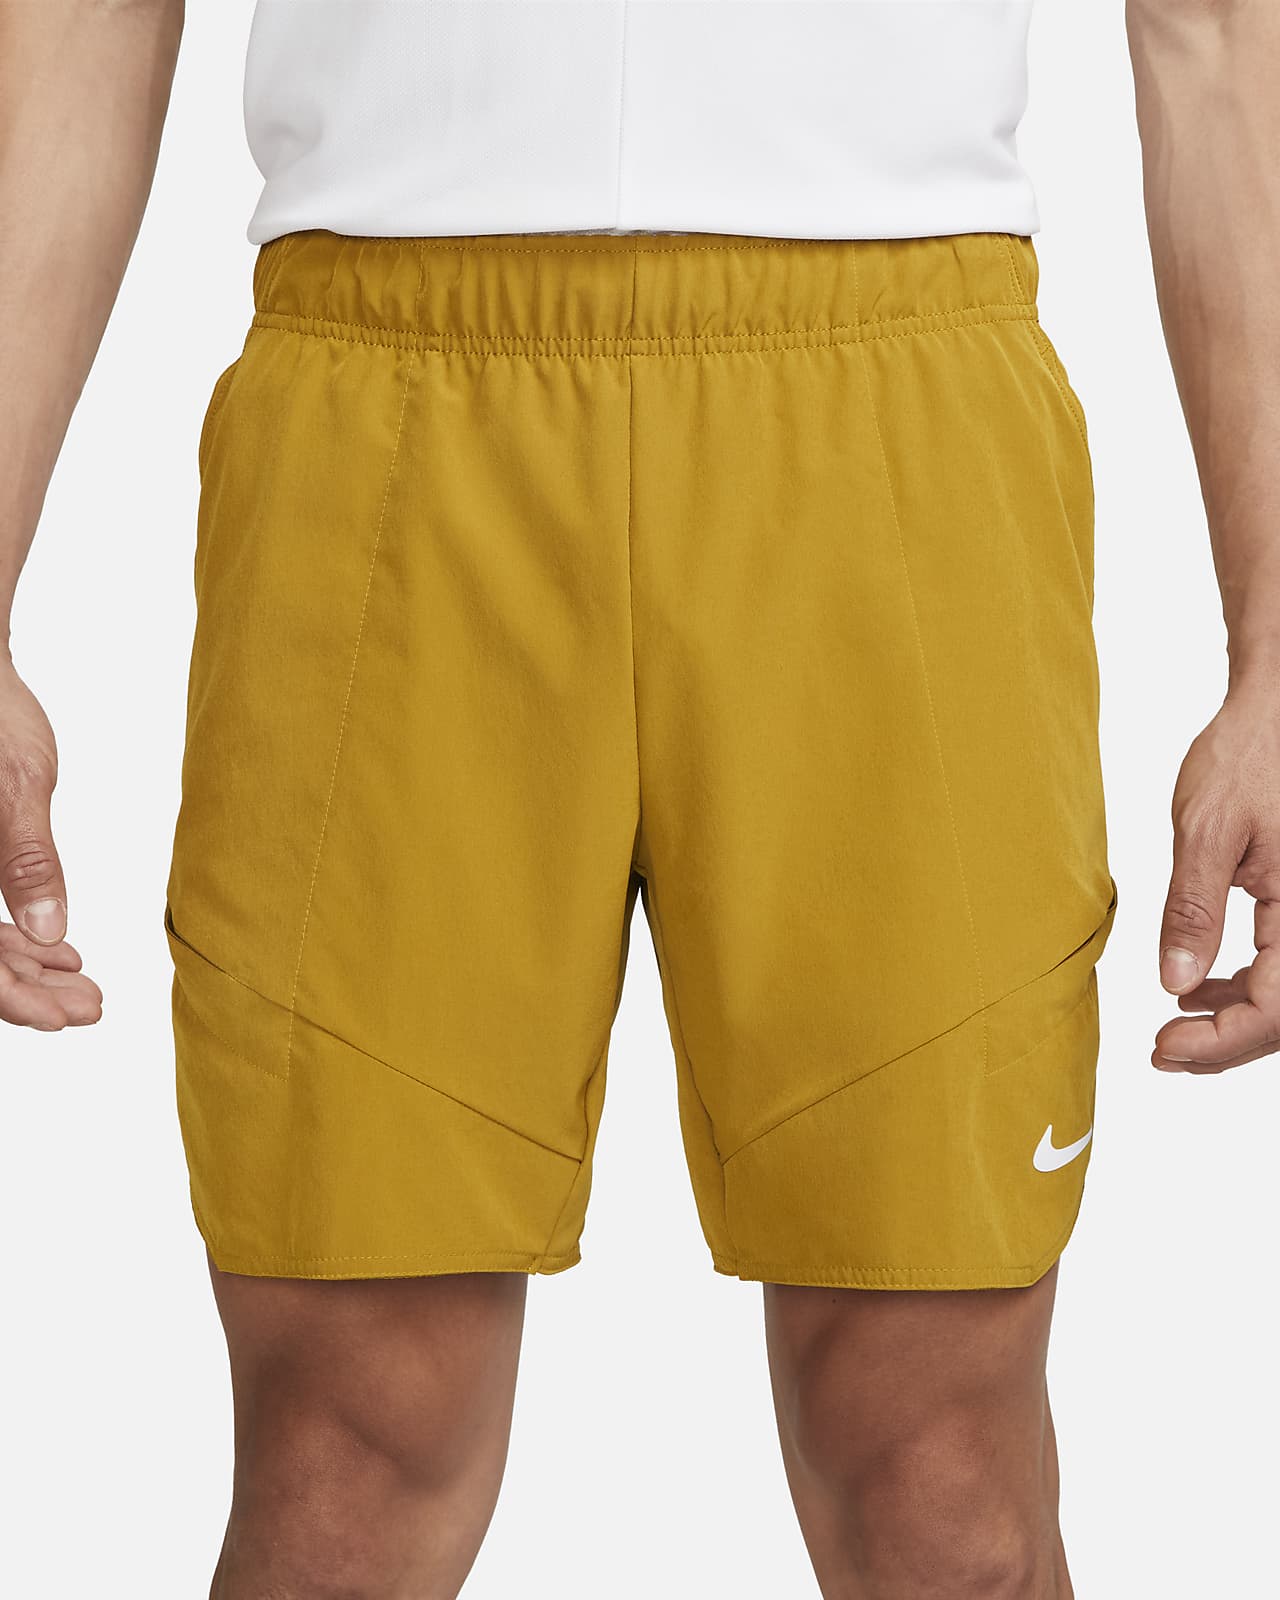 Nike Men's Court Flex Ace 7 Tennis Shorts In White, ModeSens